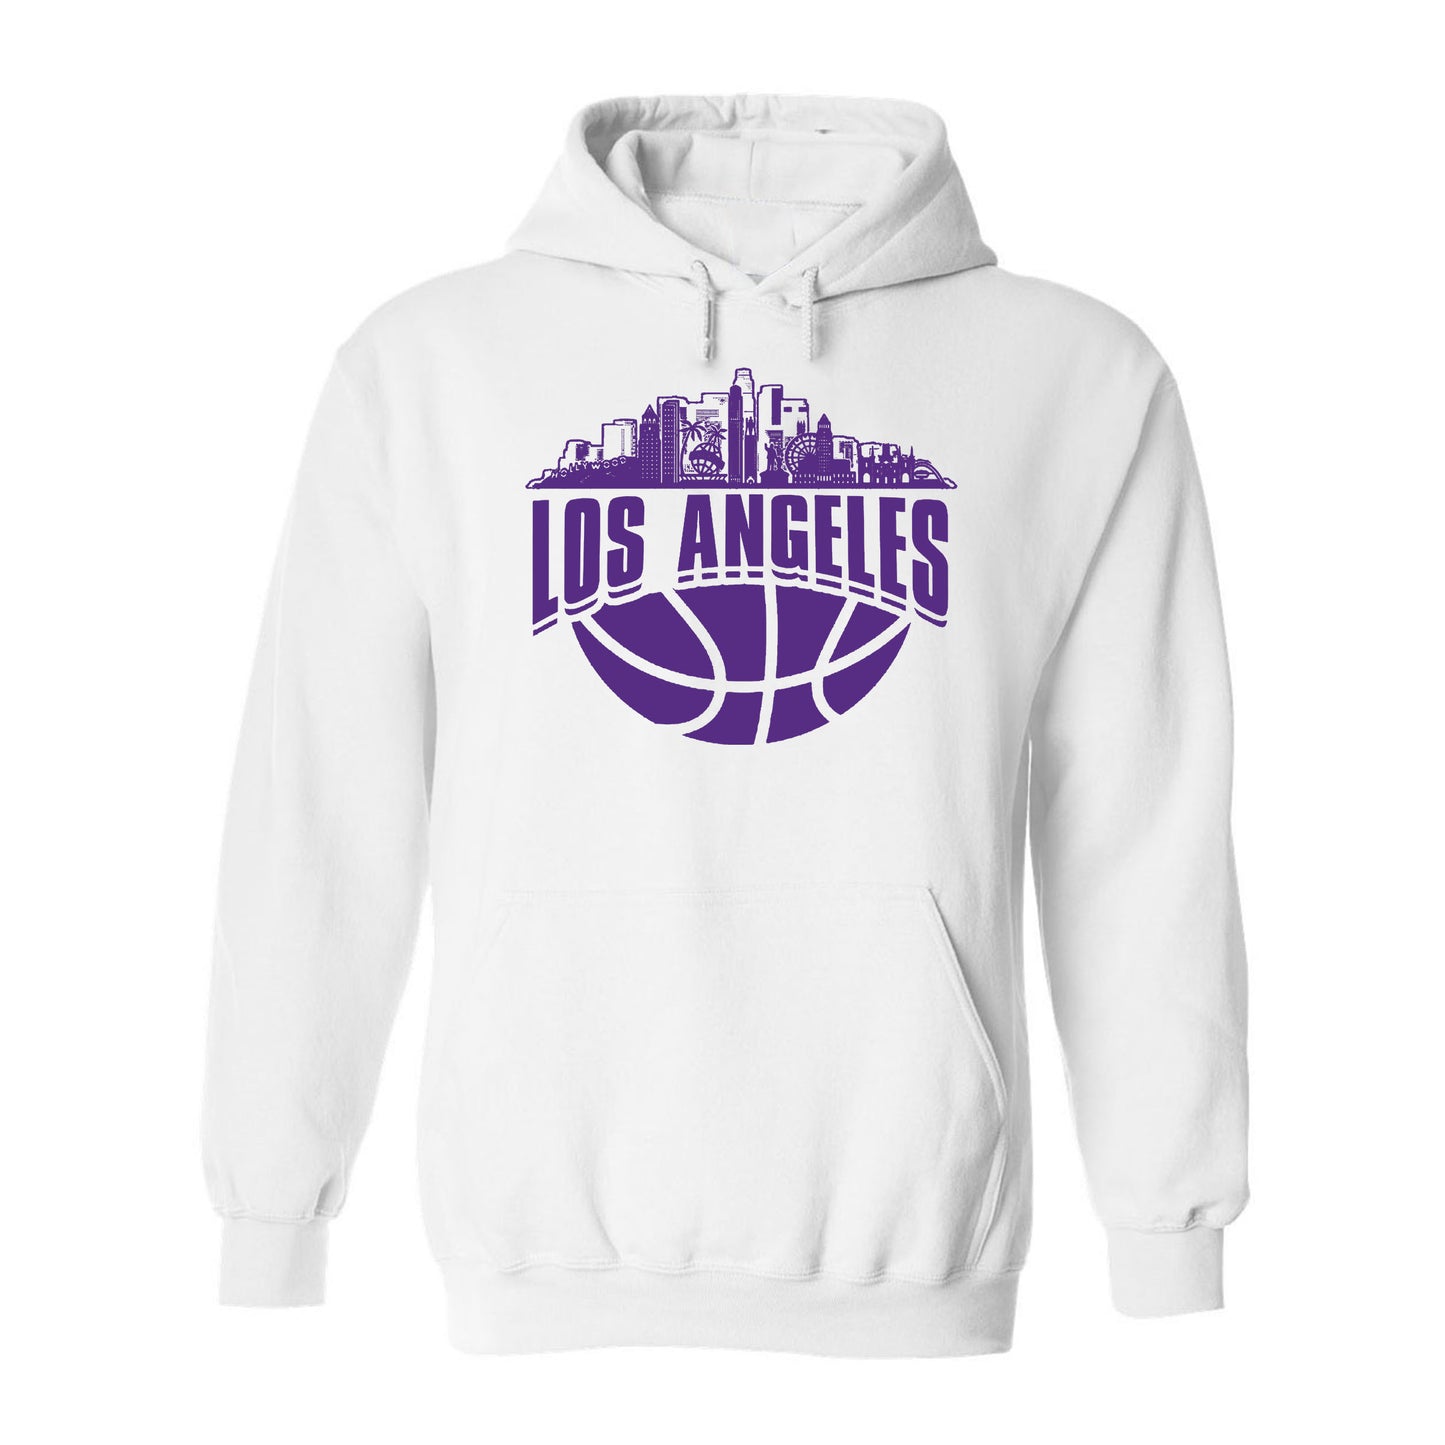 Los Angeles Basketball Jersey Cityscape Skyline Men's Shirt for Basketball Fans